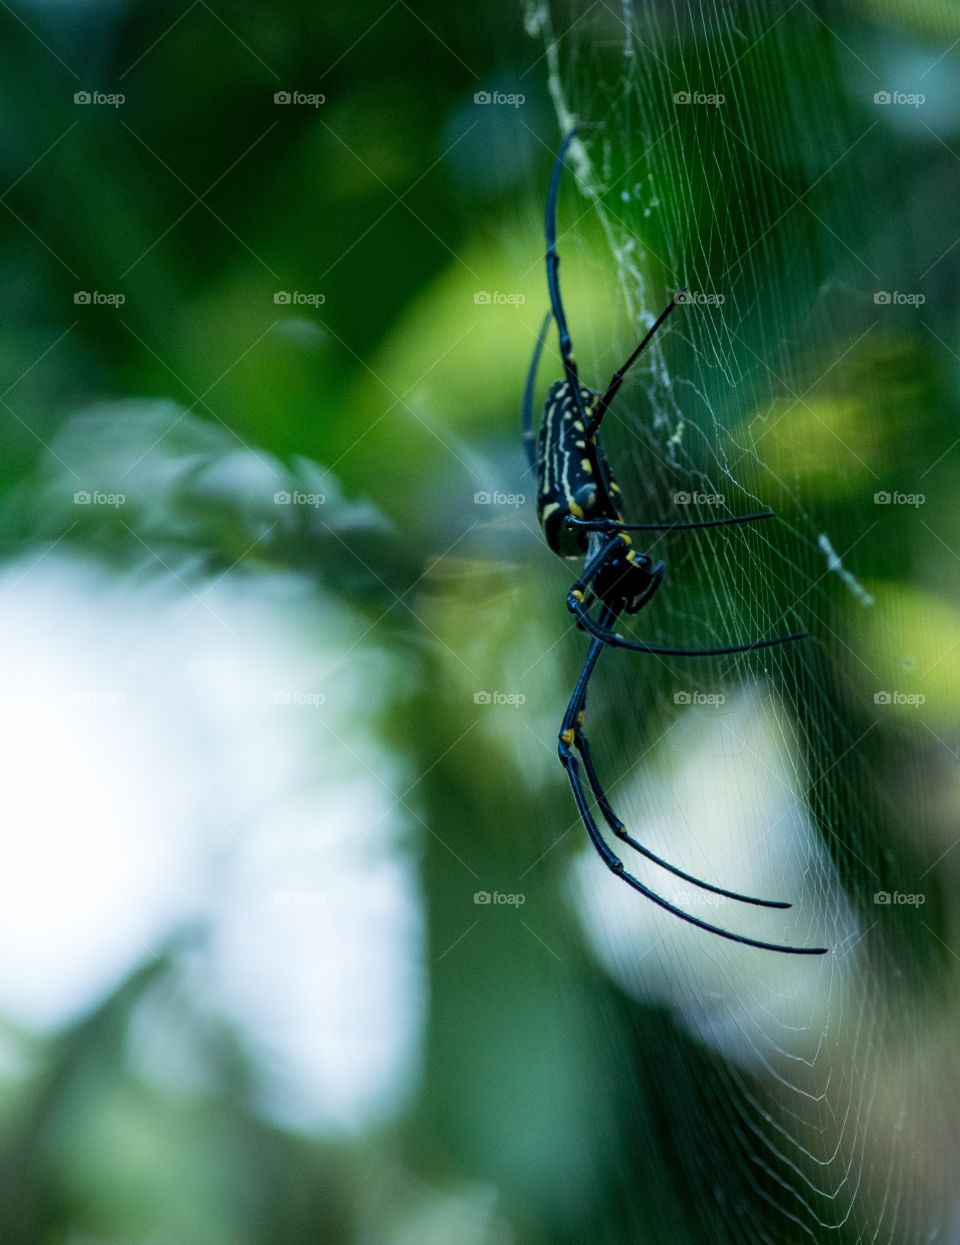 spider up close